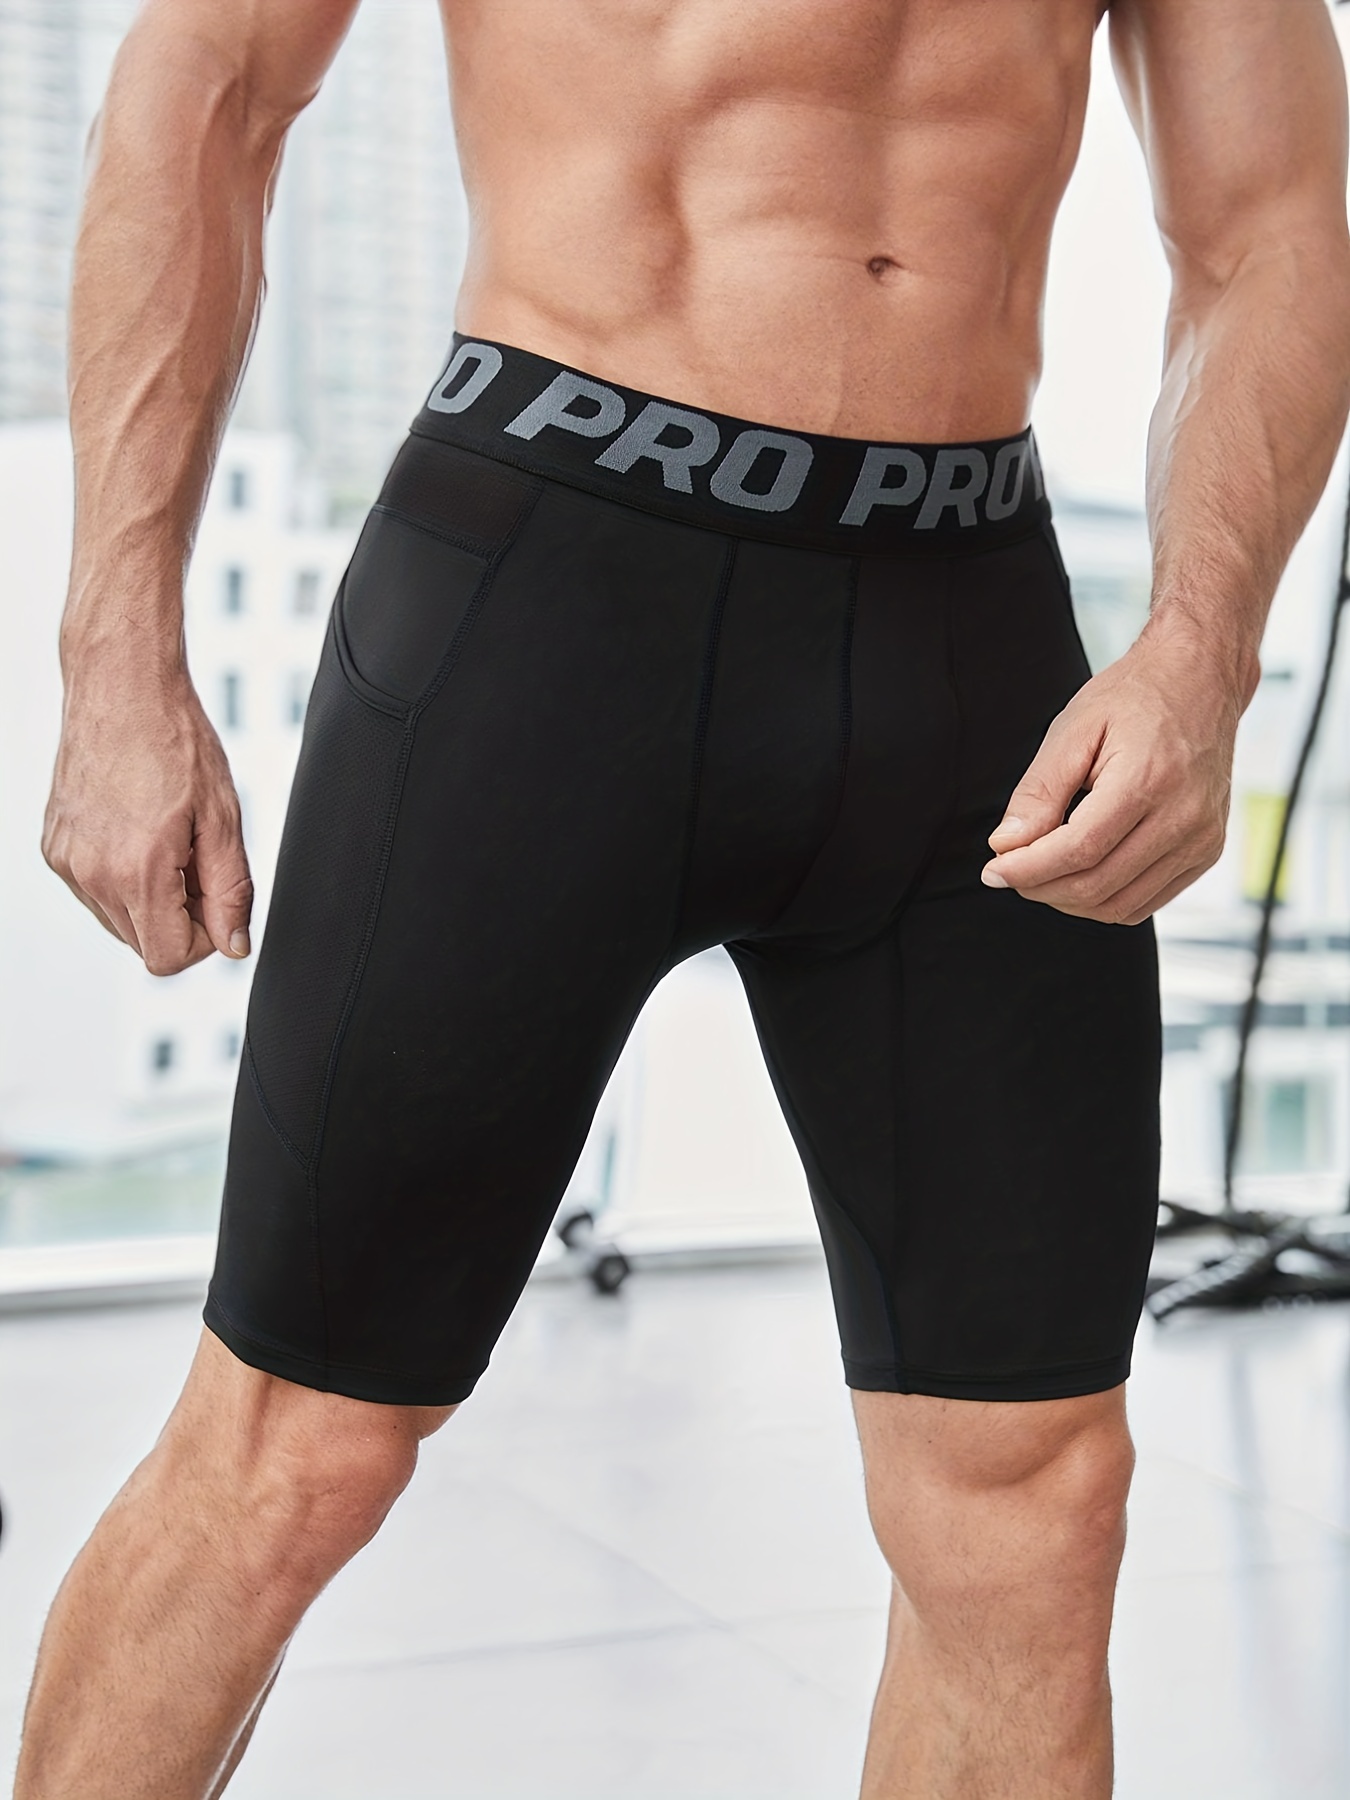 PRO Sports Fitness Leggings Shorts, Men's Tight Compression Yoga Training  High Elastic Quick Dry Shorts